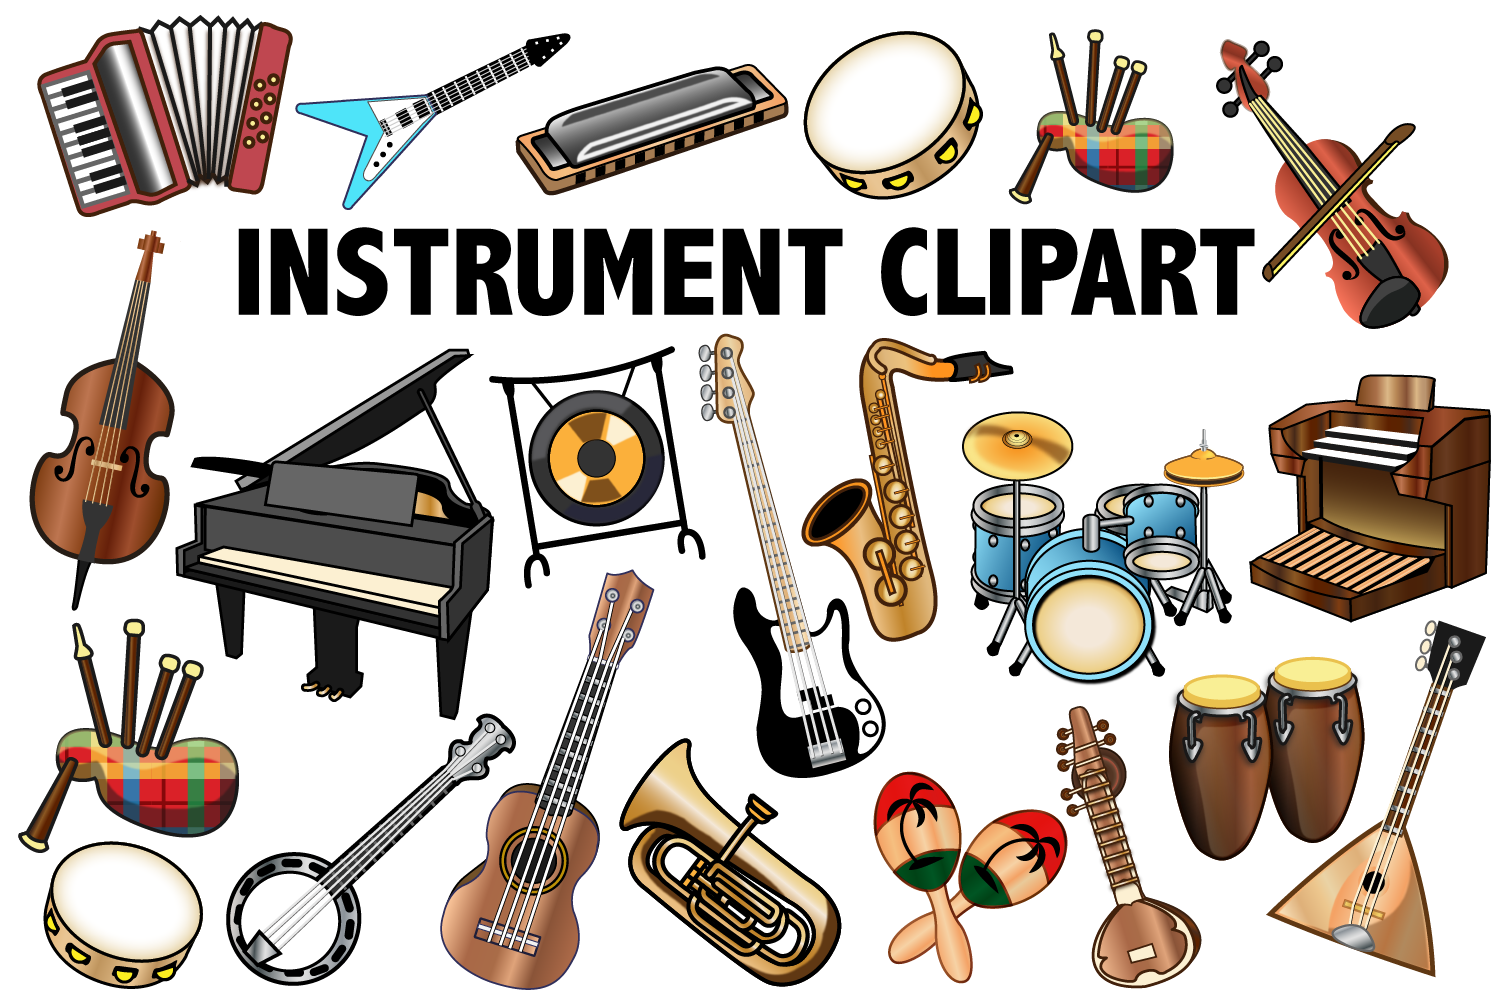 Musical instrument clipart.